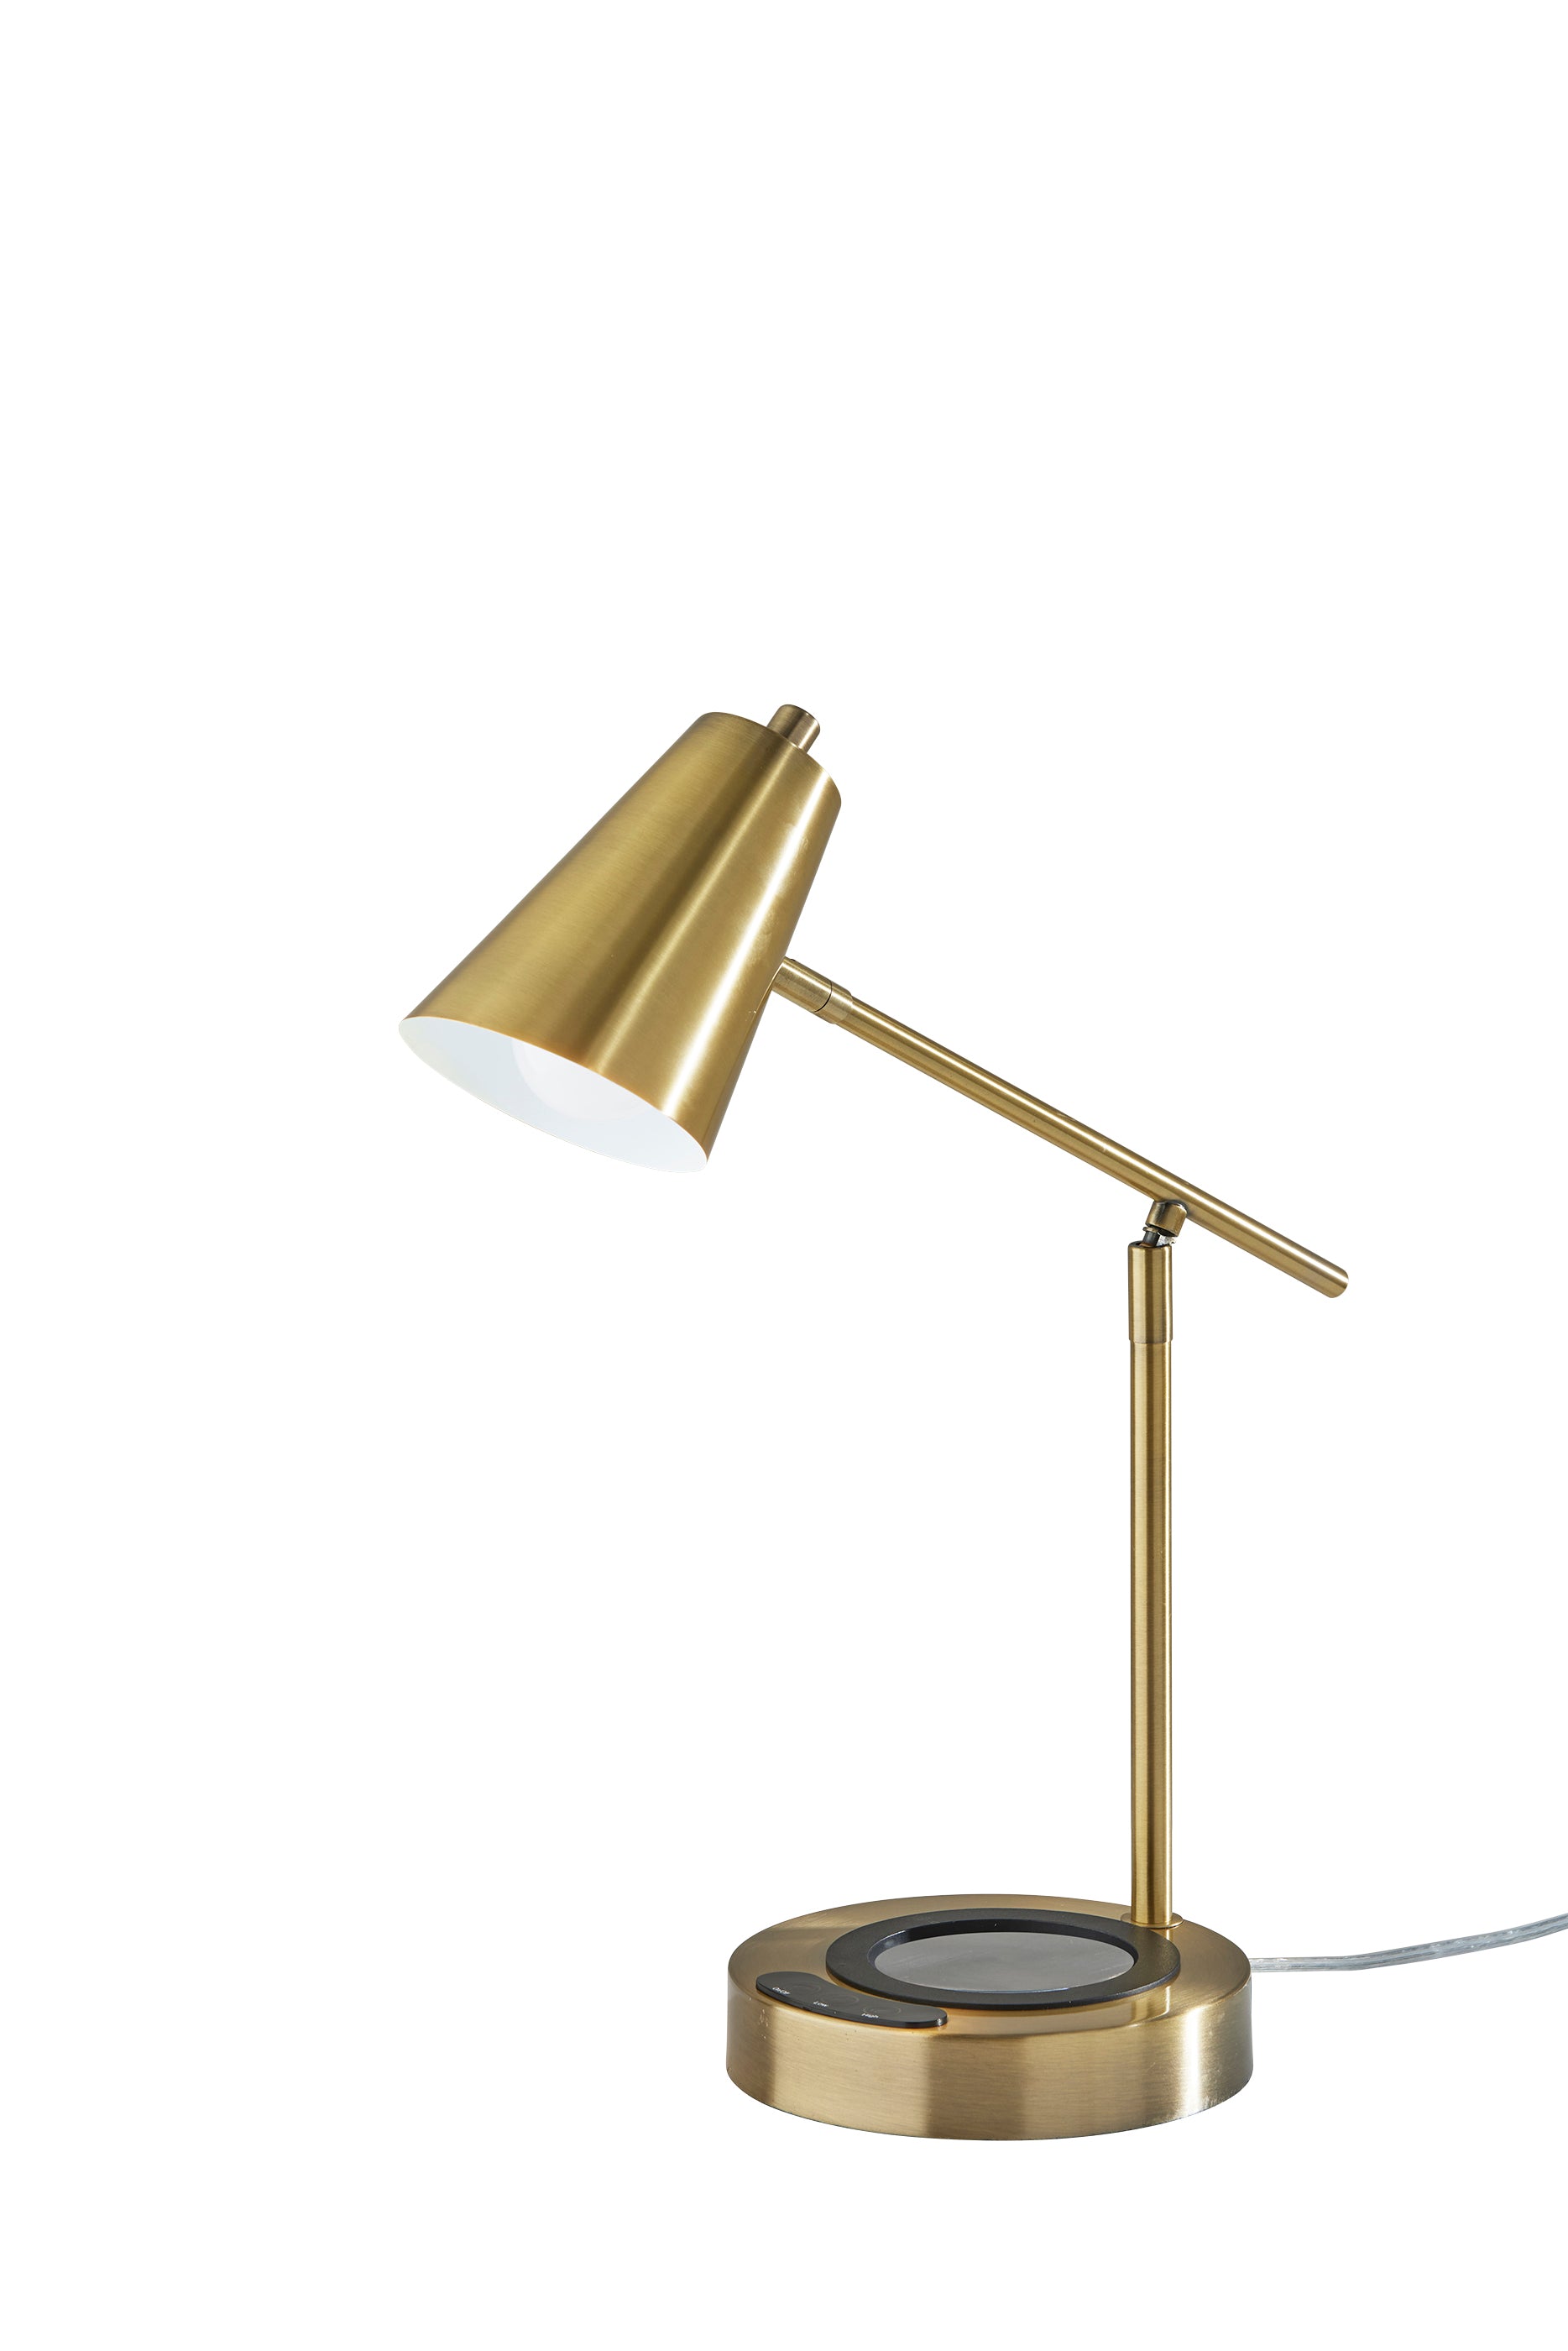 CUP WARMING Lampe sur table Or - SL3729-21 | ADESSO